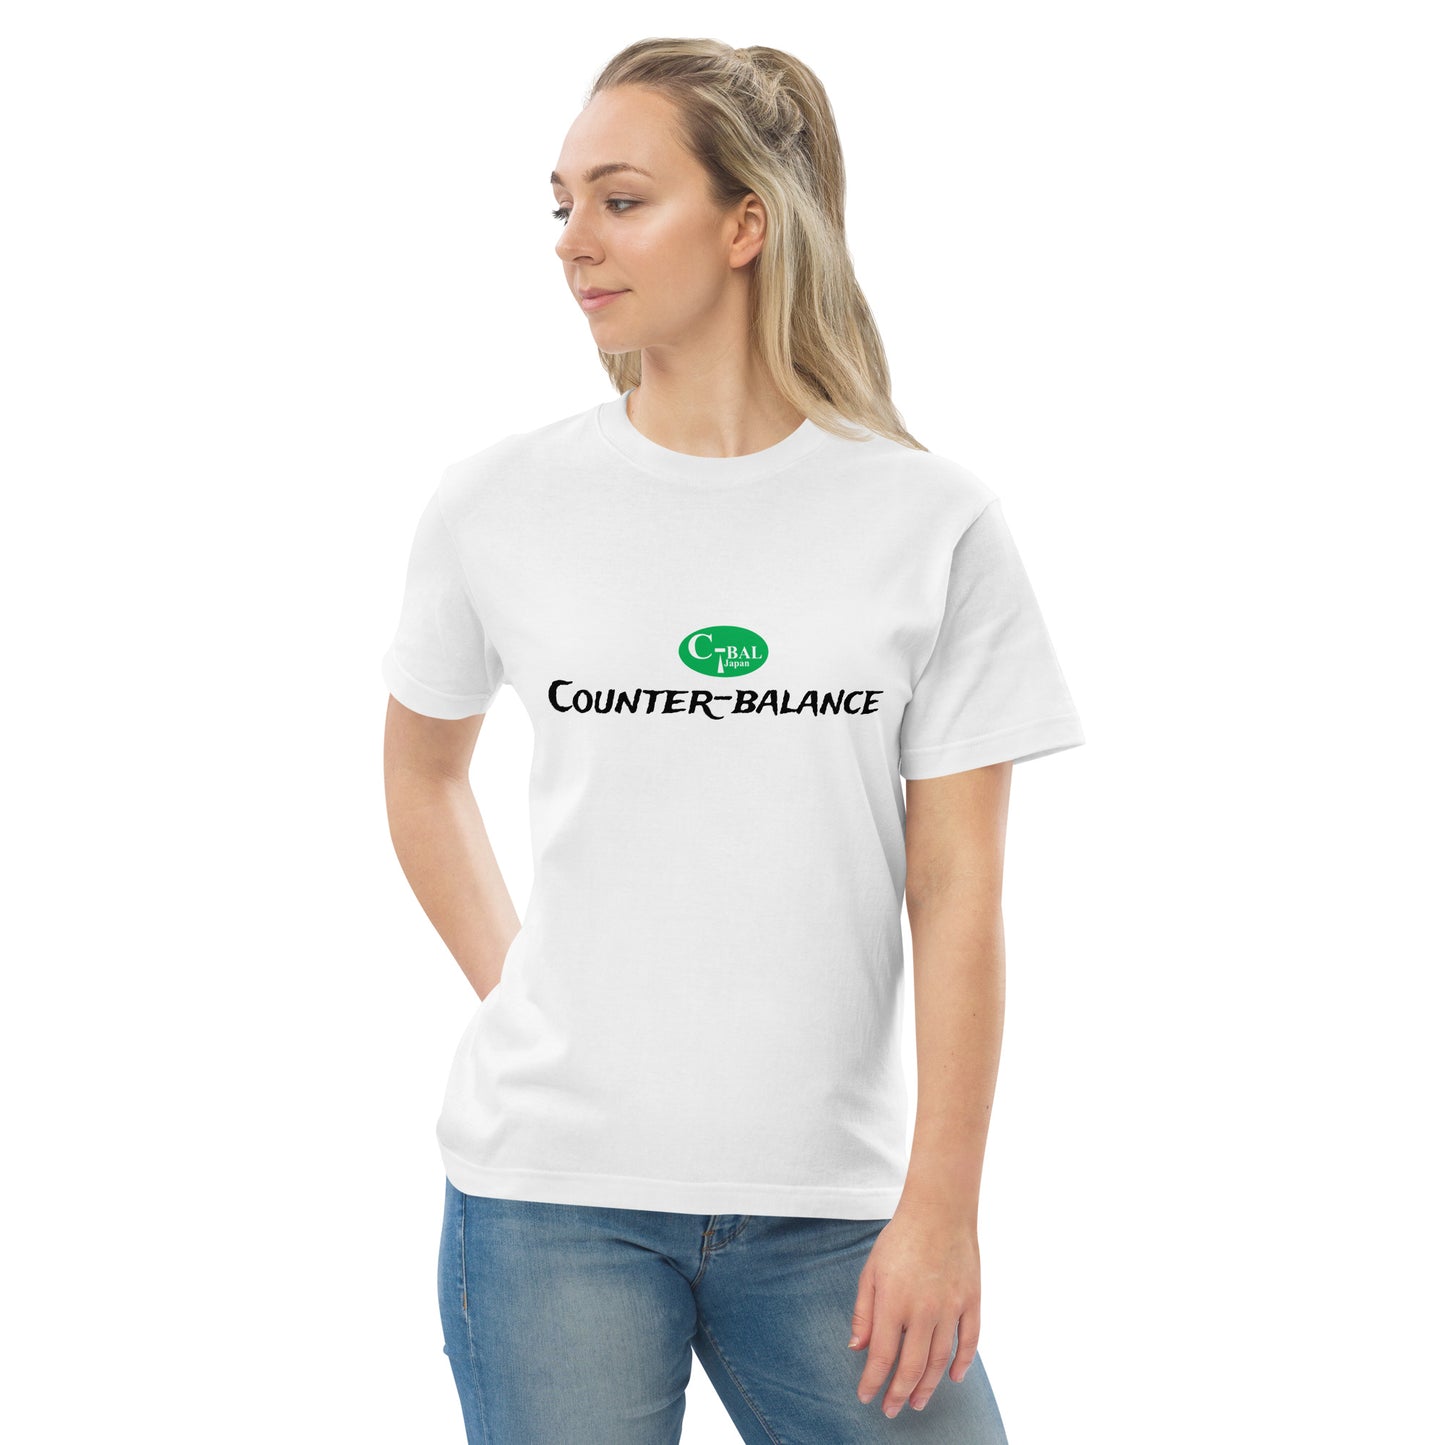 A003 - High Quality Cotton T-shirt (C-BAL : White / Green)